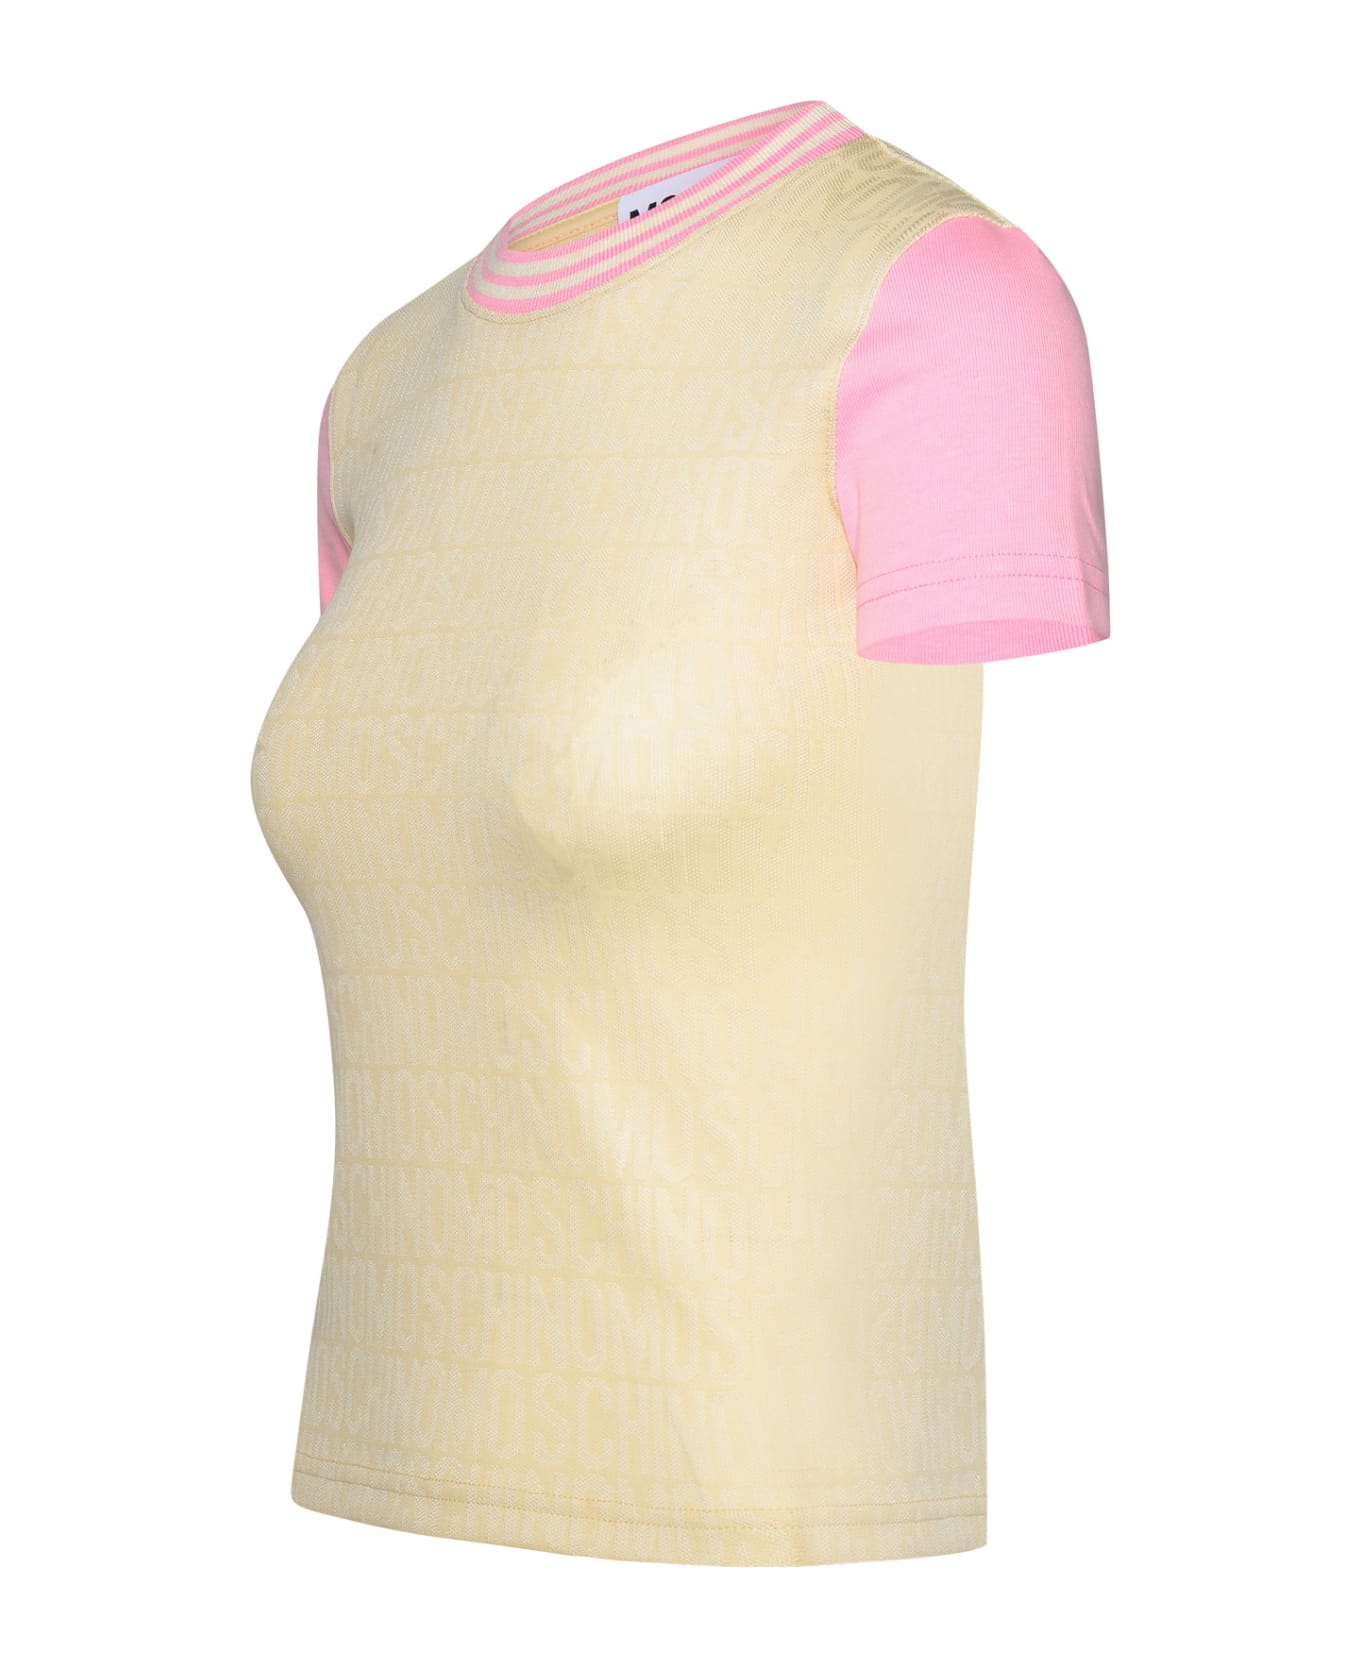 Moschino Multicolor Cotton Blend T-shirt - Avorio